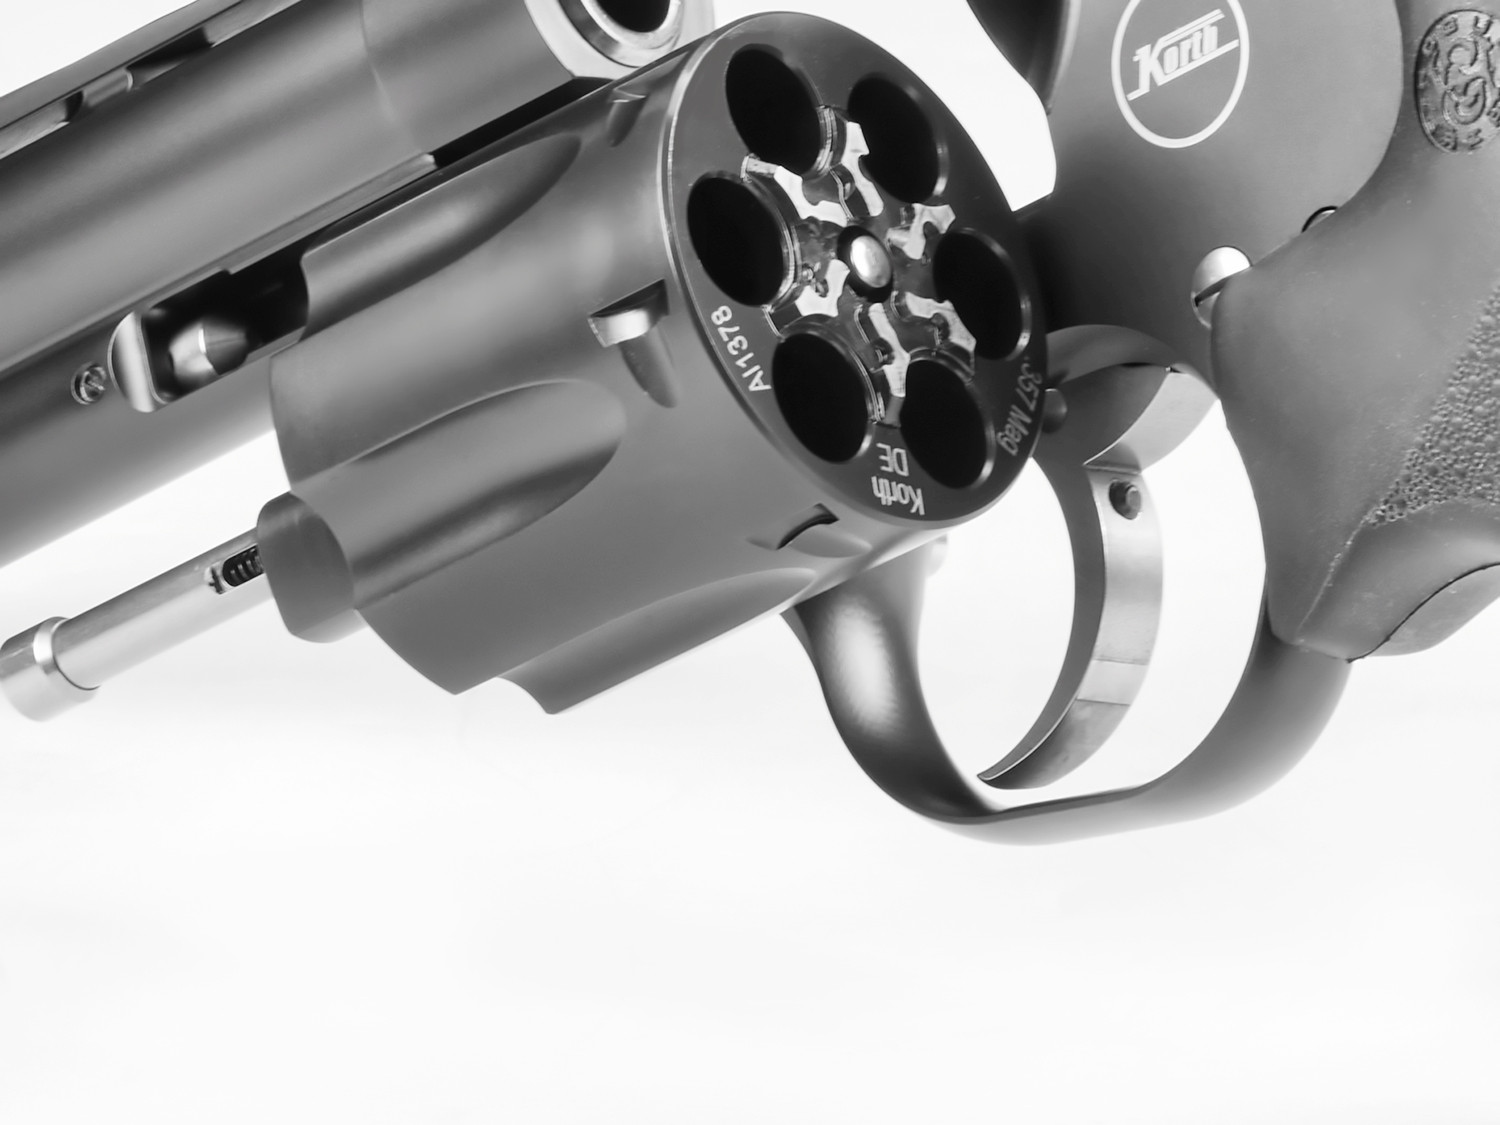 Nighthawk Custom Korth Mongoose 357 Magnum Revolver